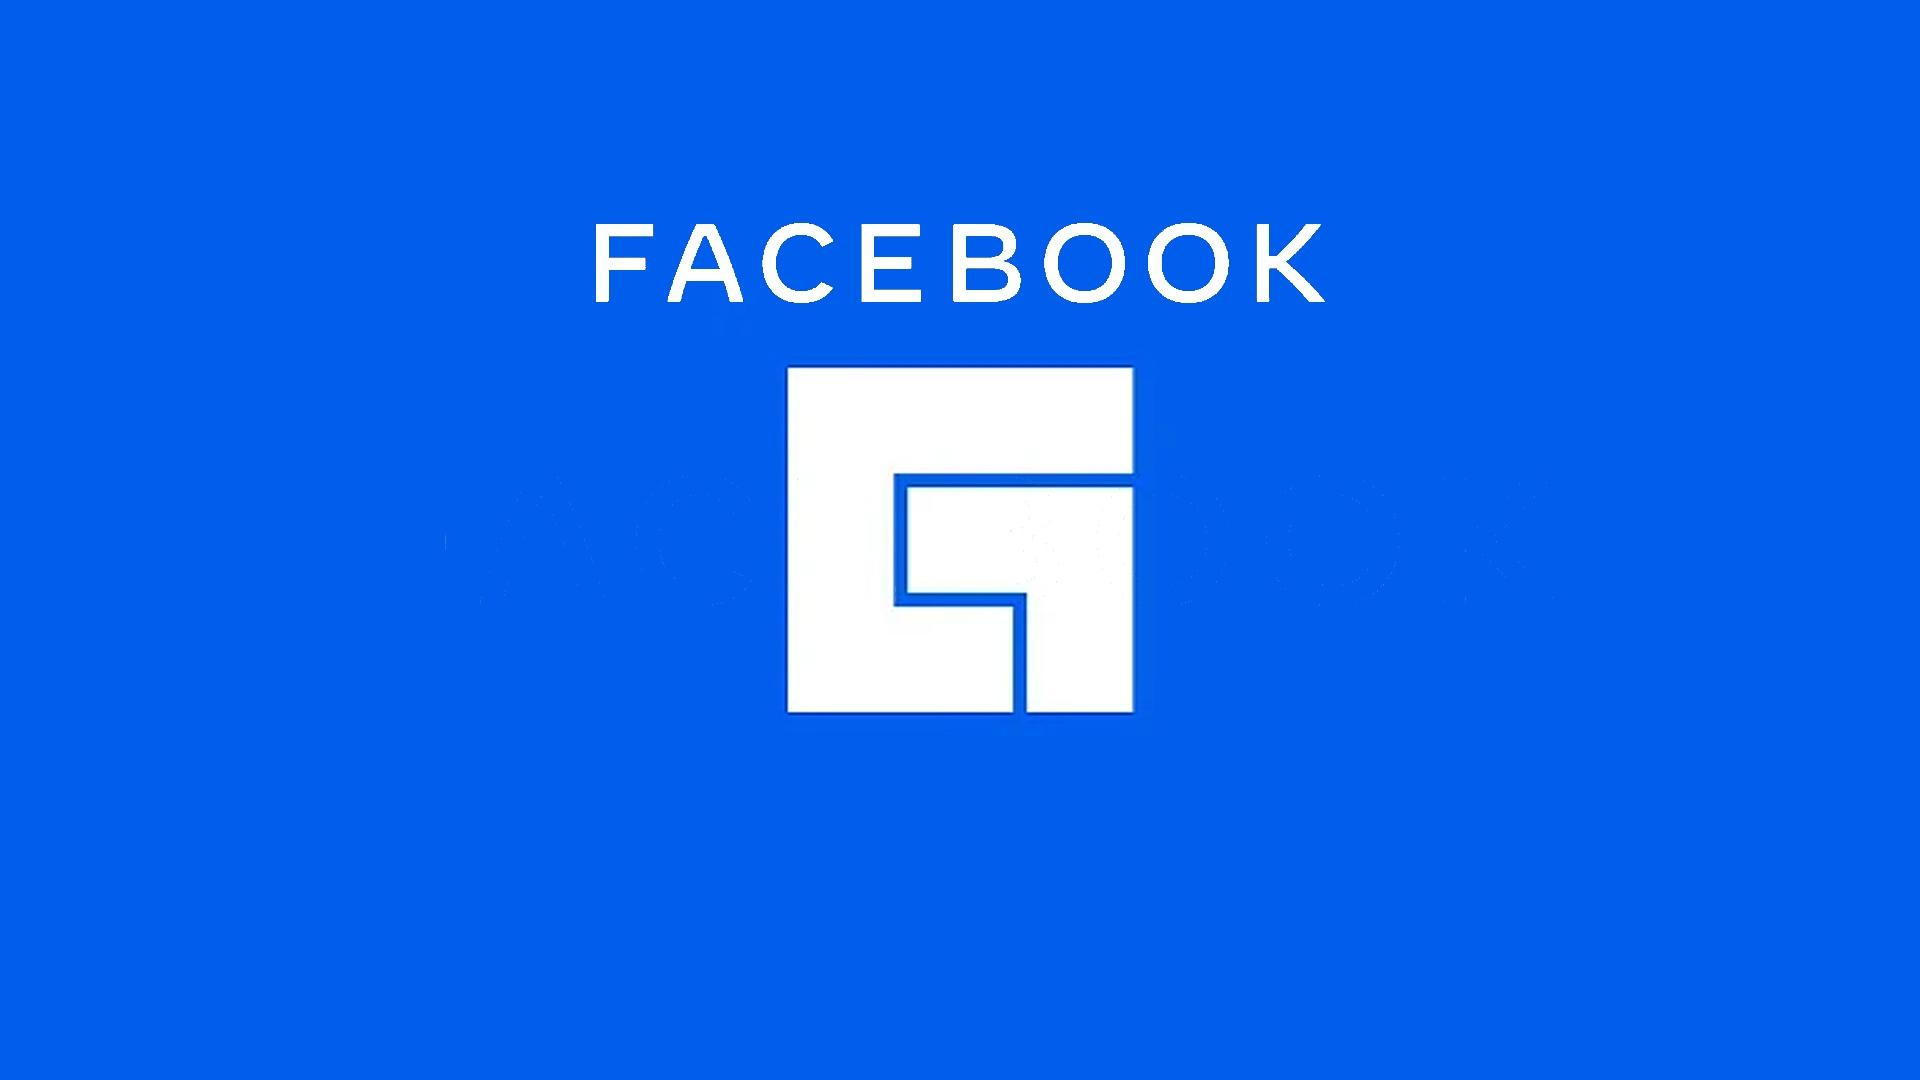 Facebook Gaming App Shutting Down Soon - GameRevolution